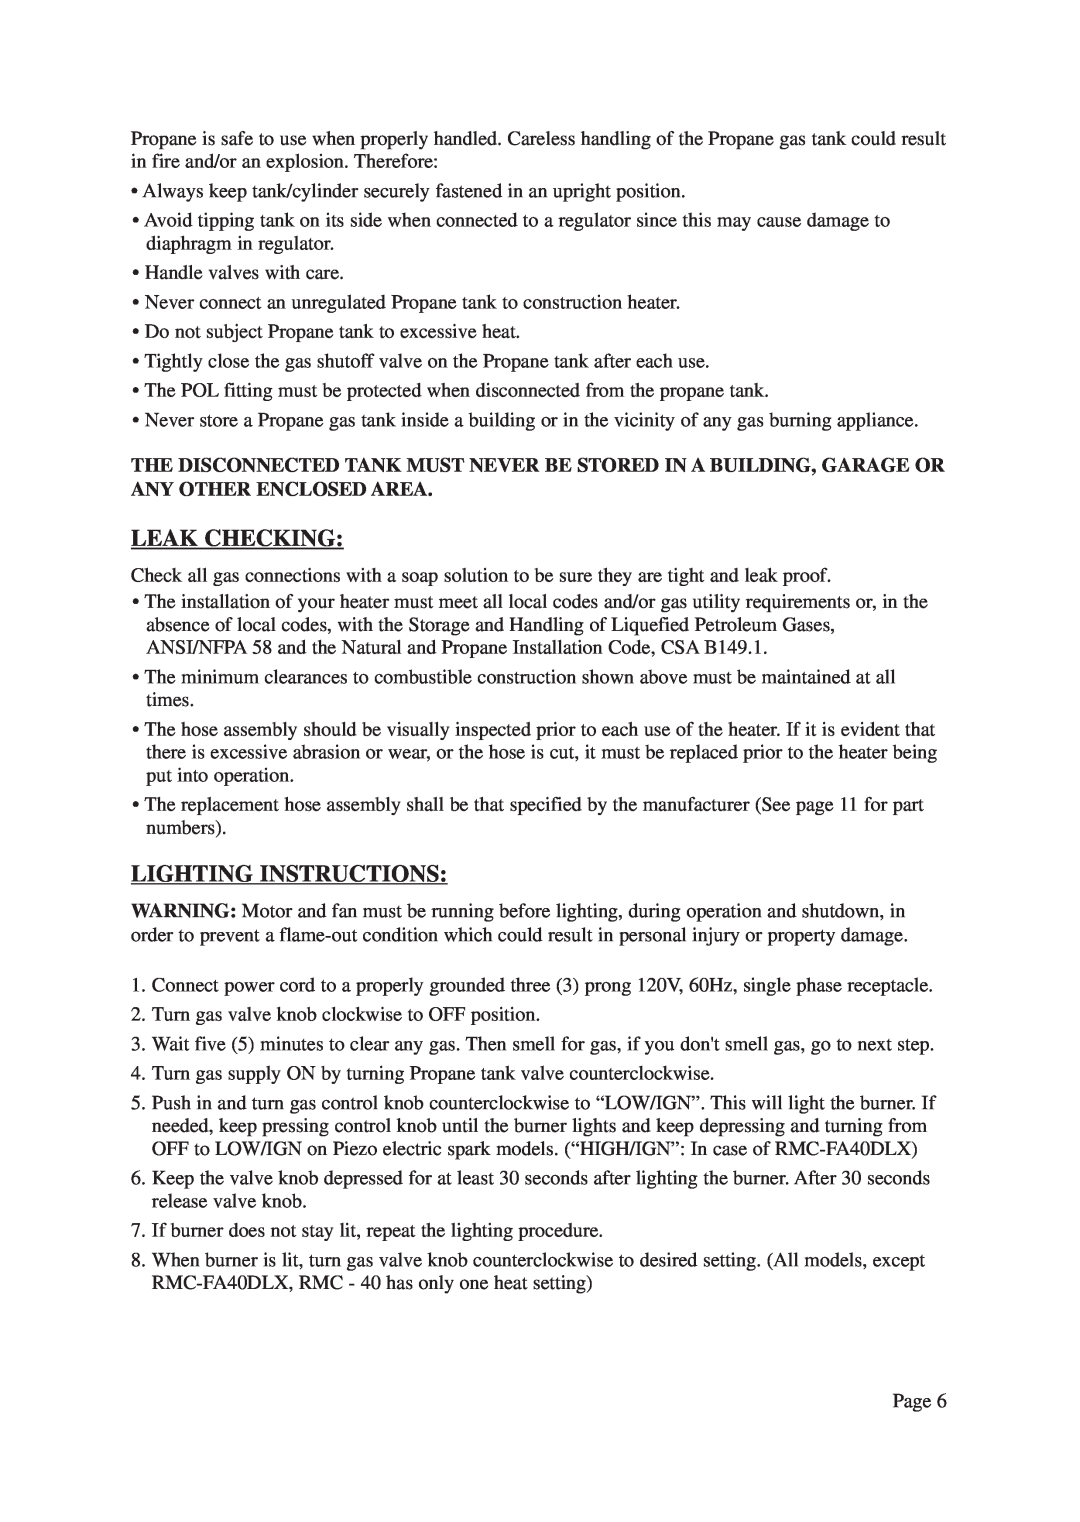 Vermont Casting ANSI Z83.7-2000, CSA 2.14-2000 instruction manual Leak Checking, Lighting Instructions 